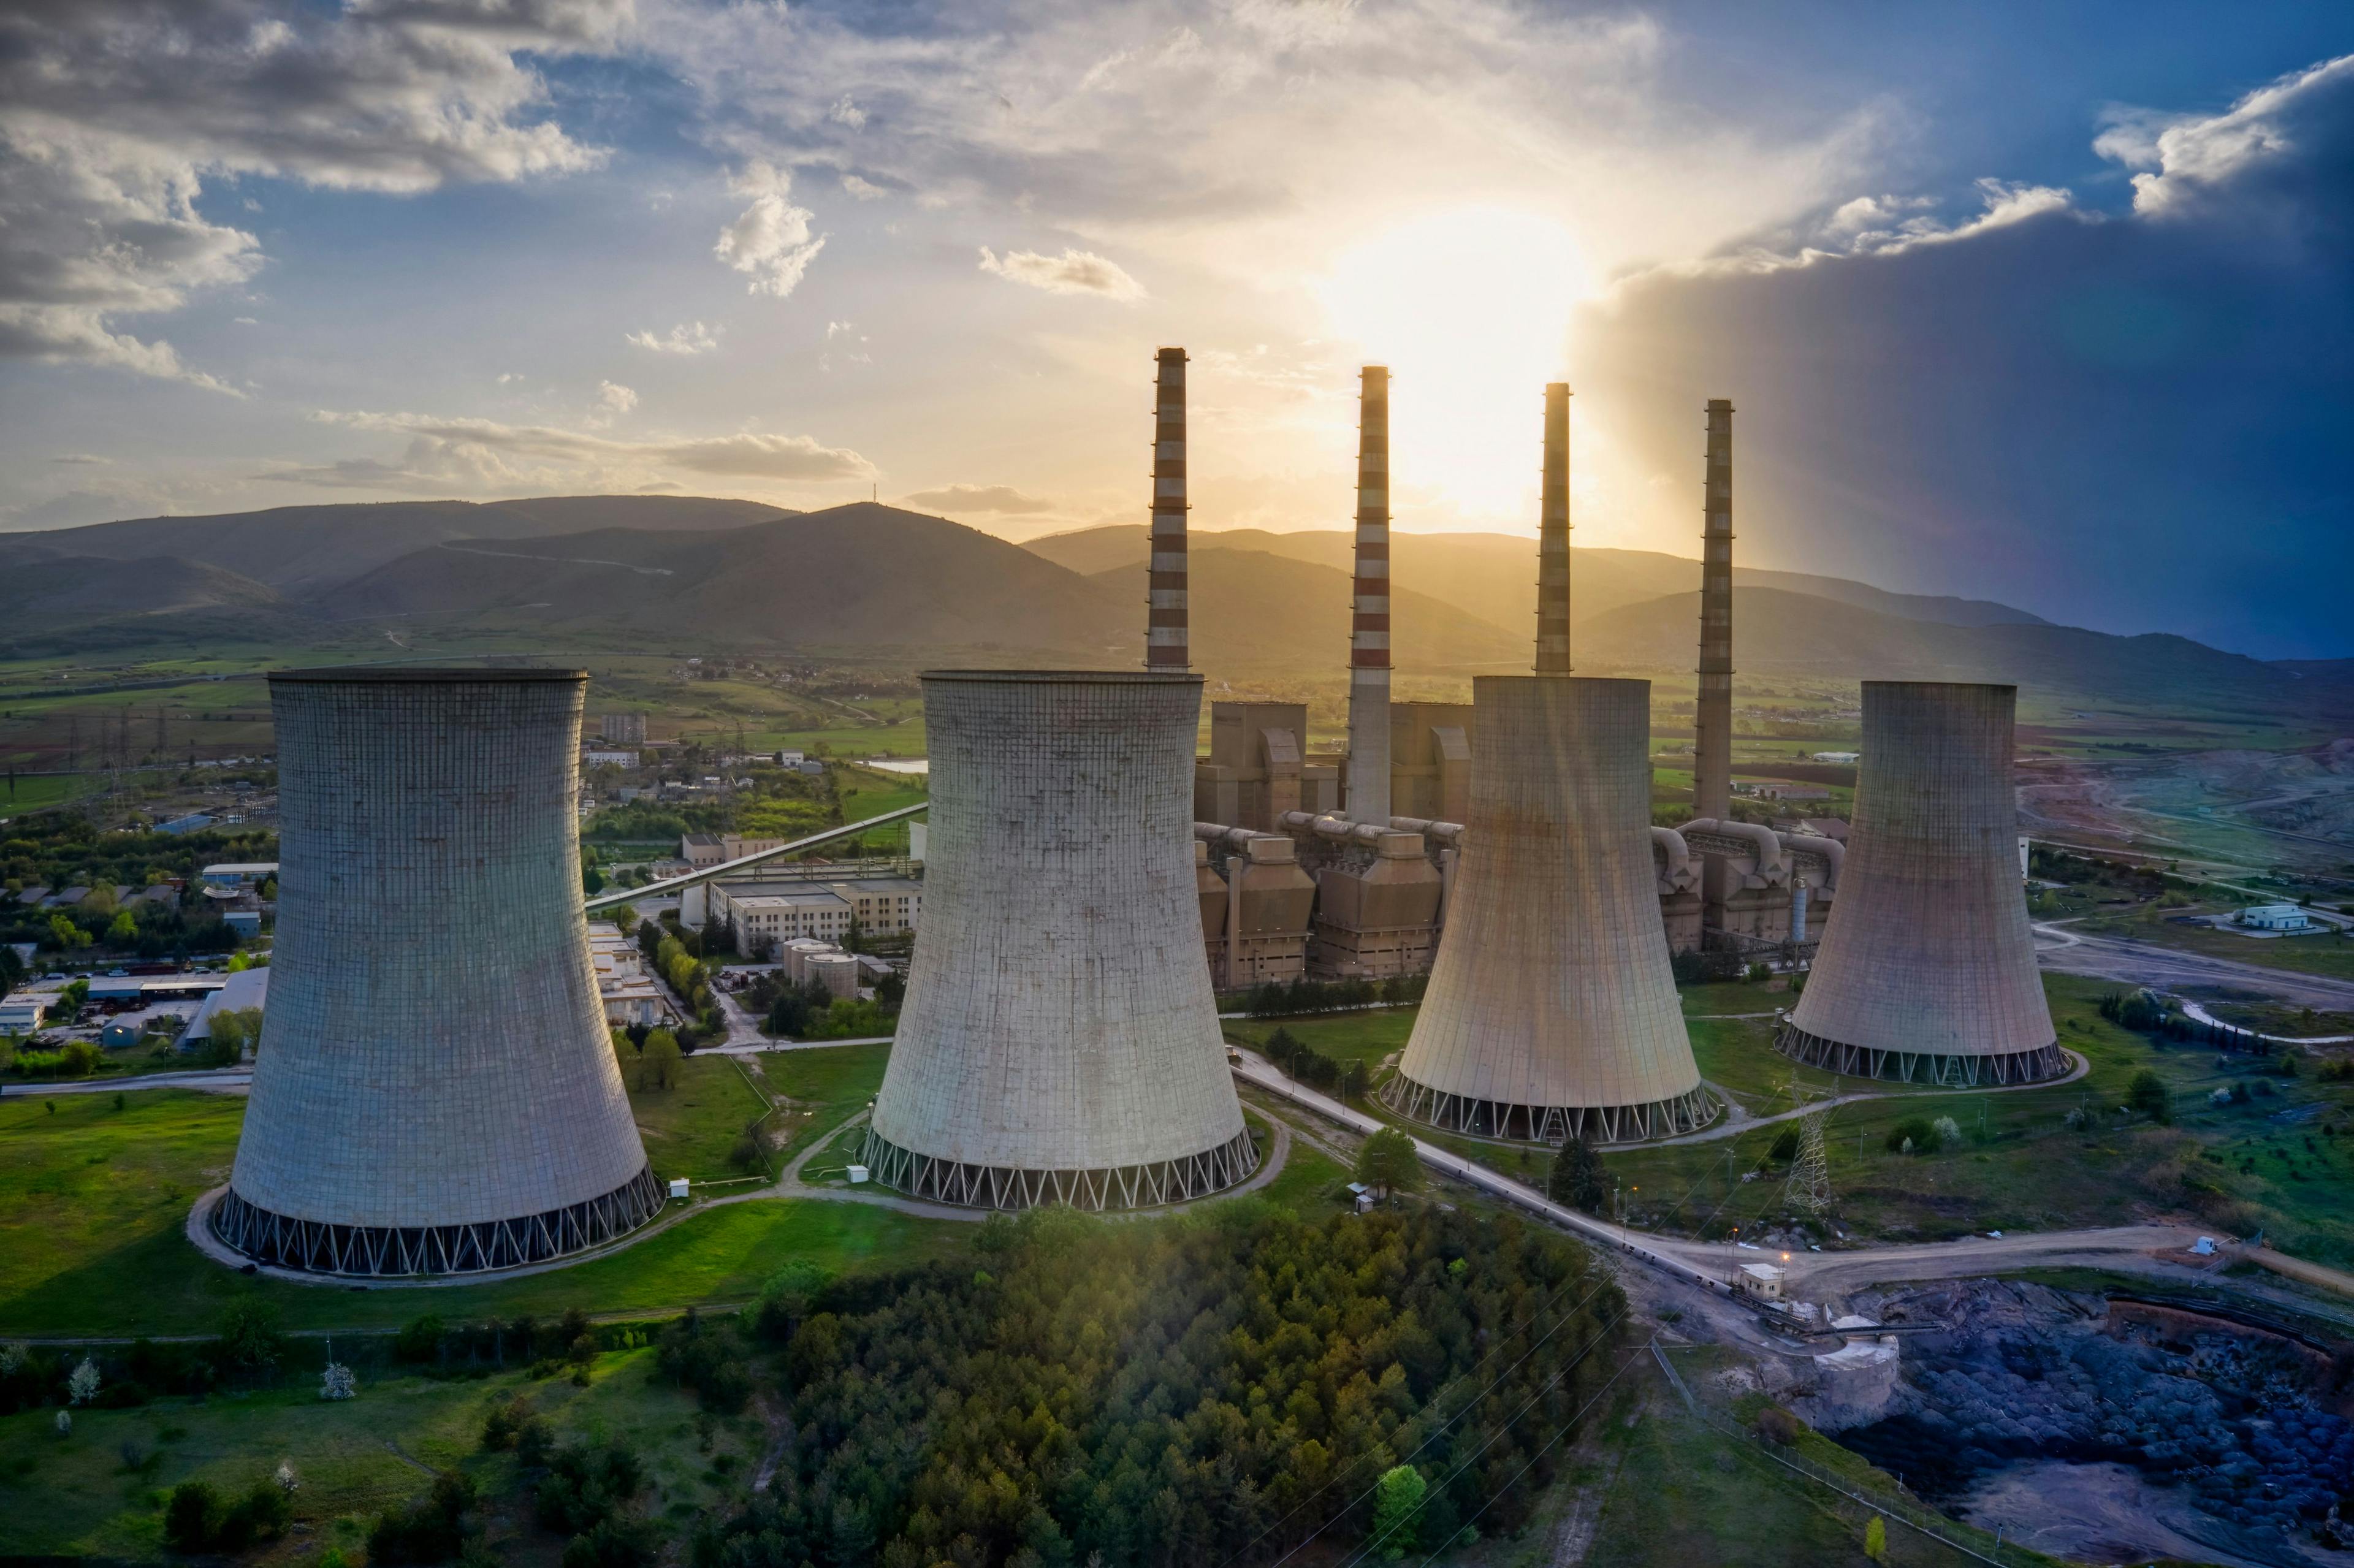 lignite power plant producing electrical energy | Image Credit: © ververidis - stock.adobe.com.